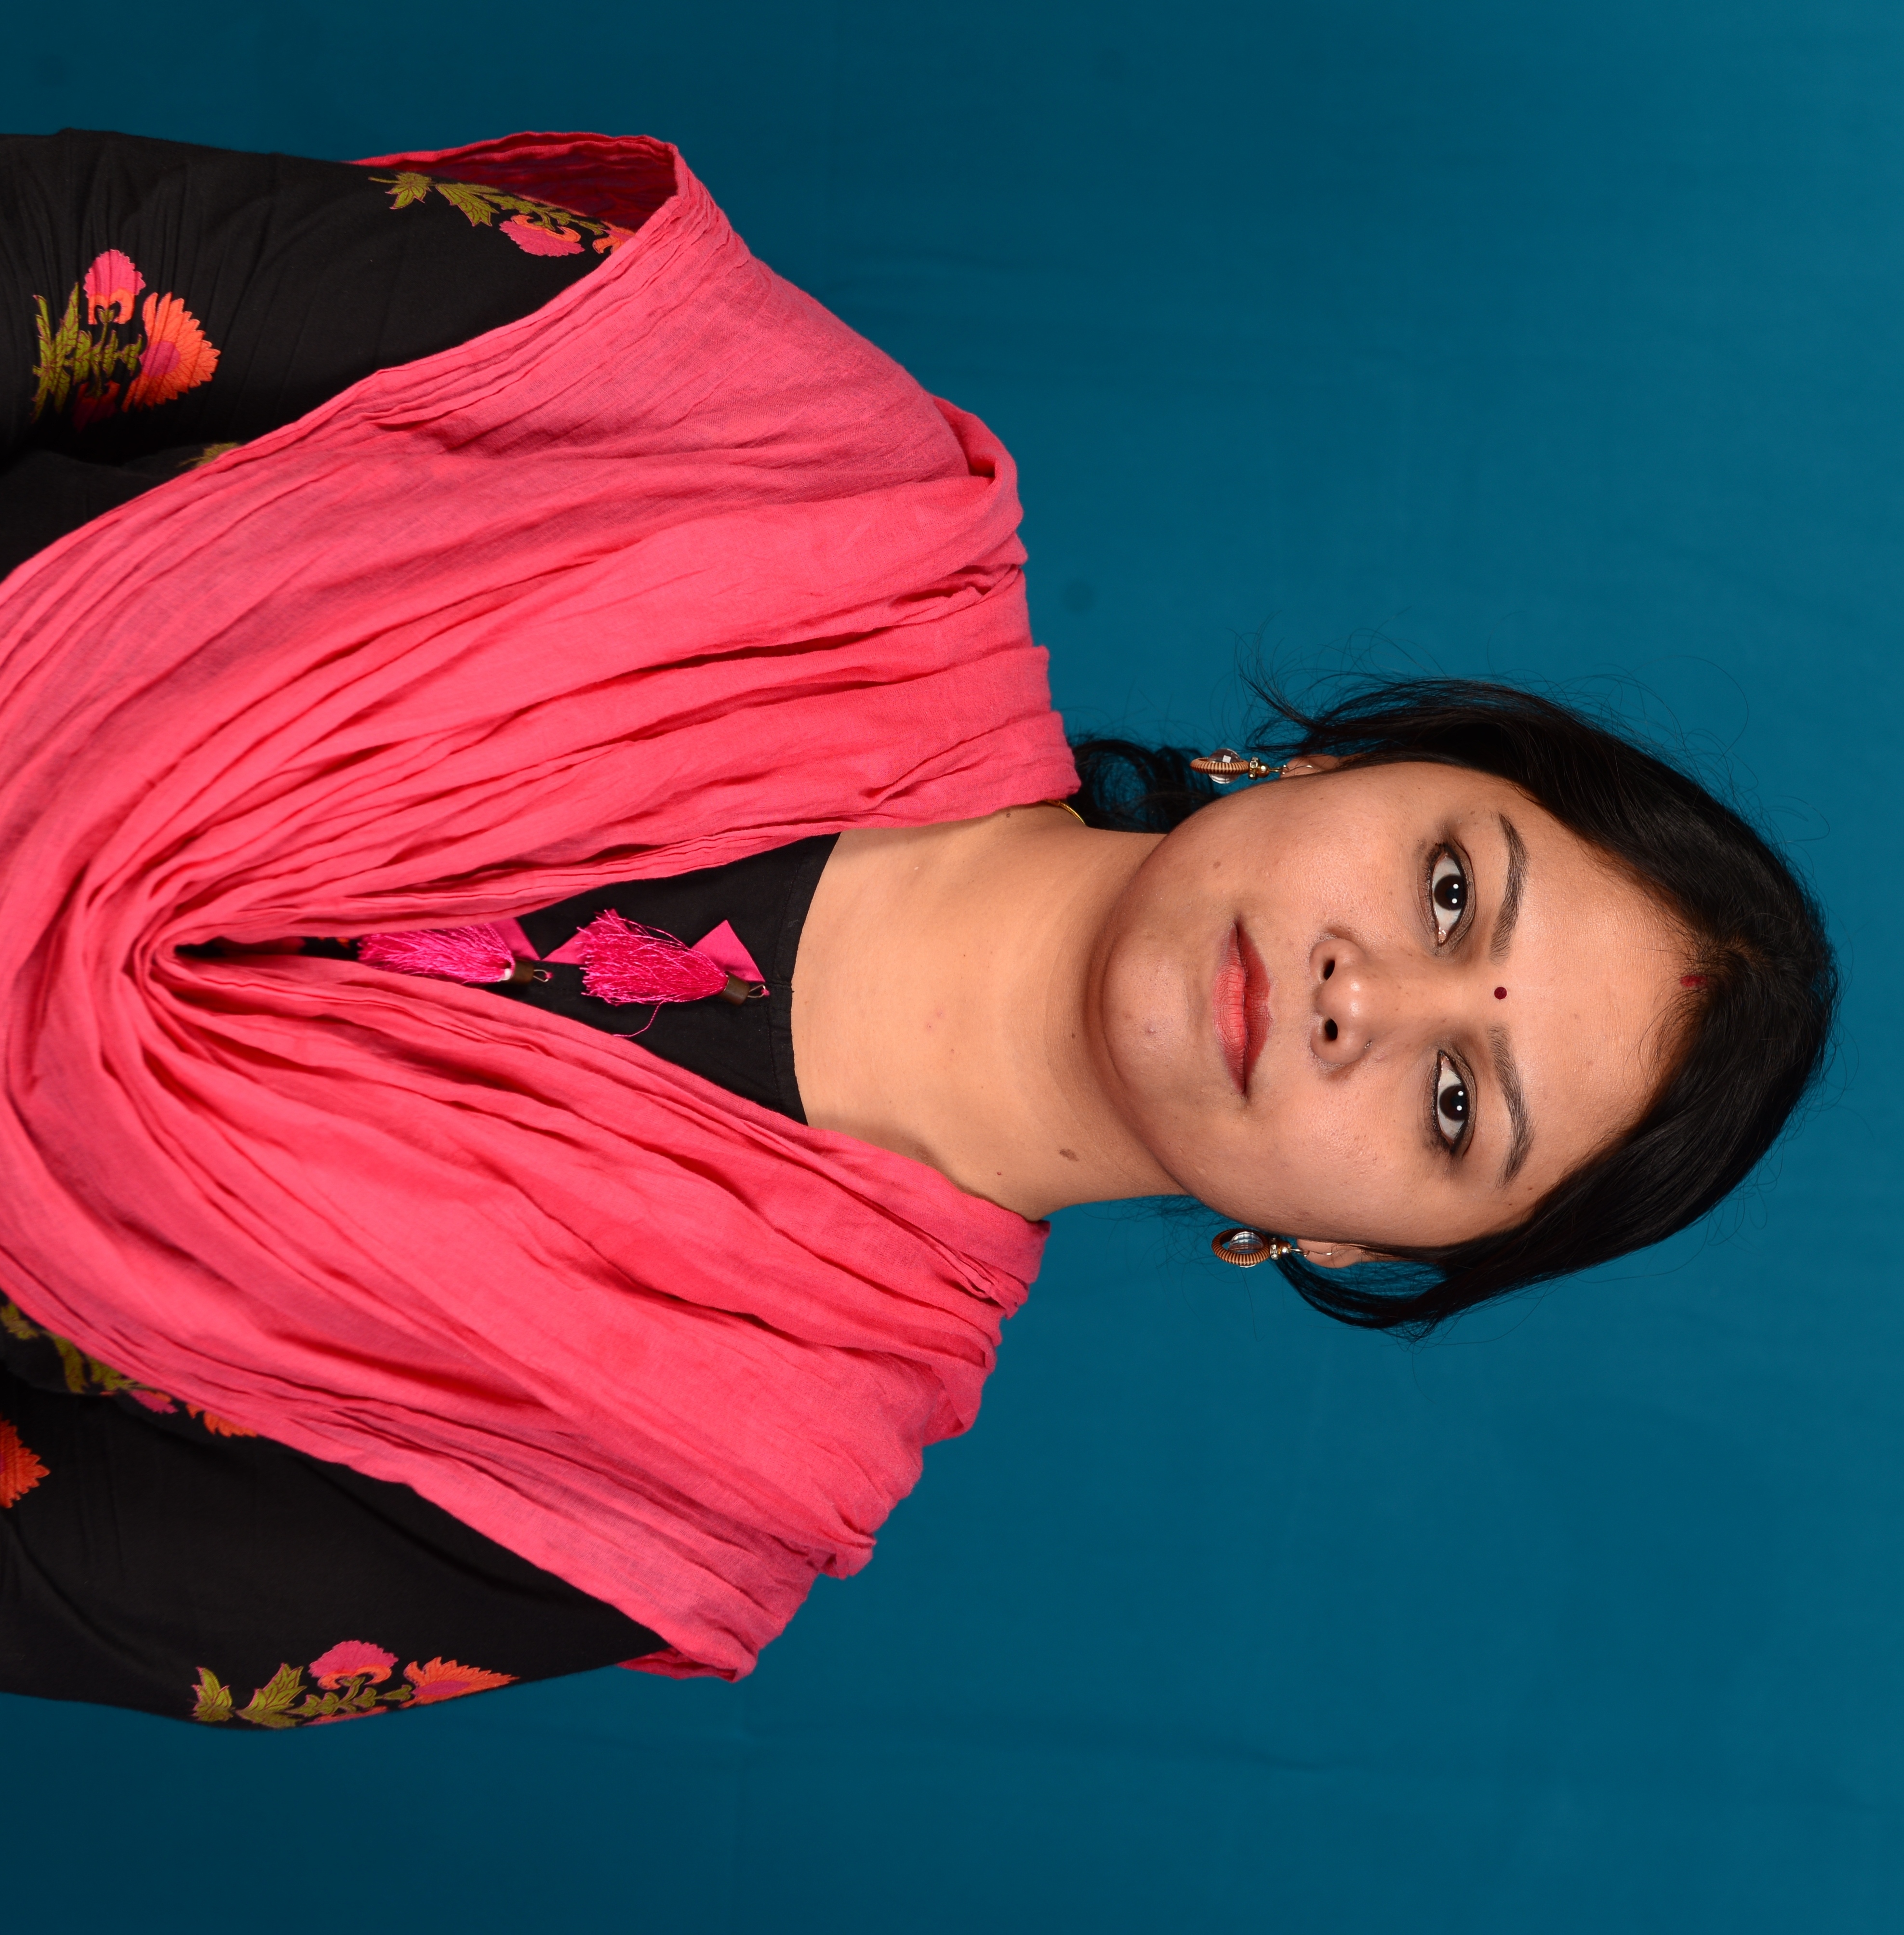 Rashmi Varma